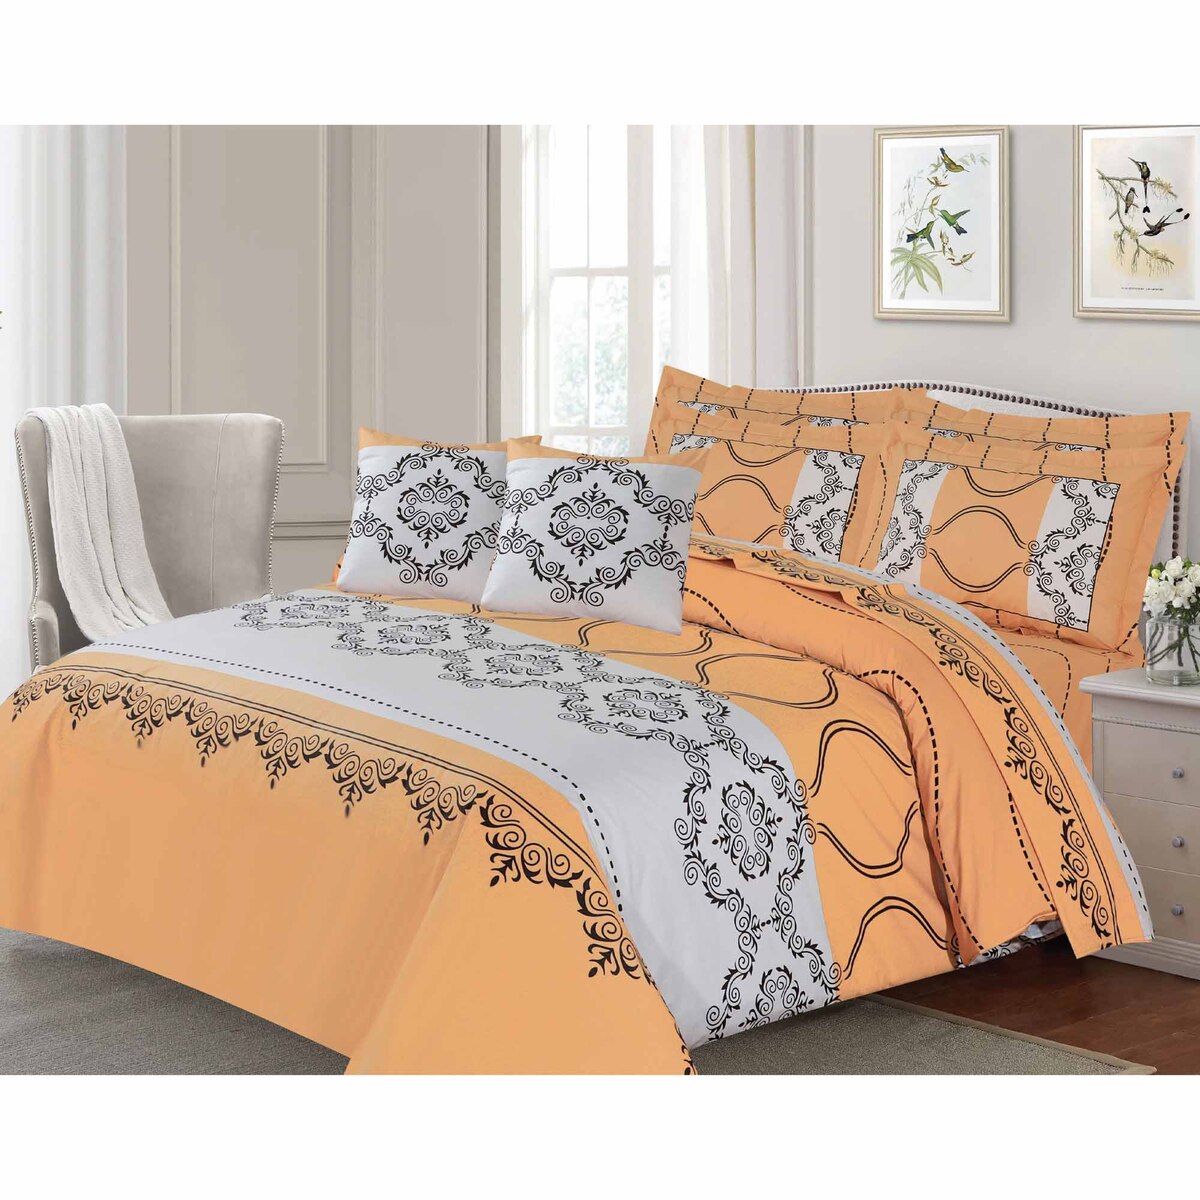 Barbarella Cotton Bedsheet (220x240cm) Double 3pcs Set 144TC Renio